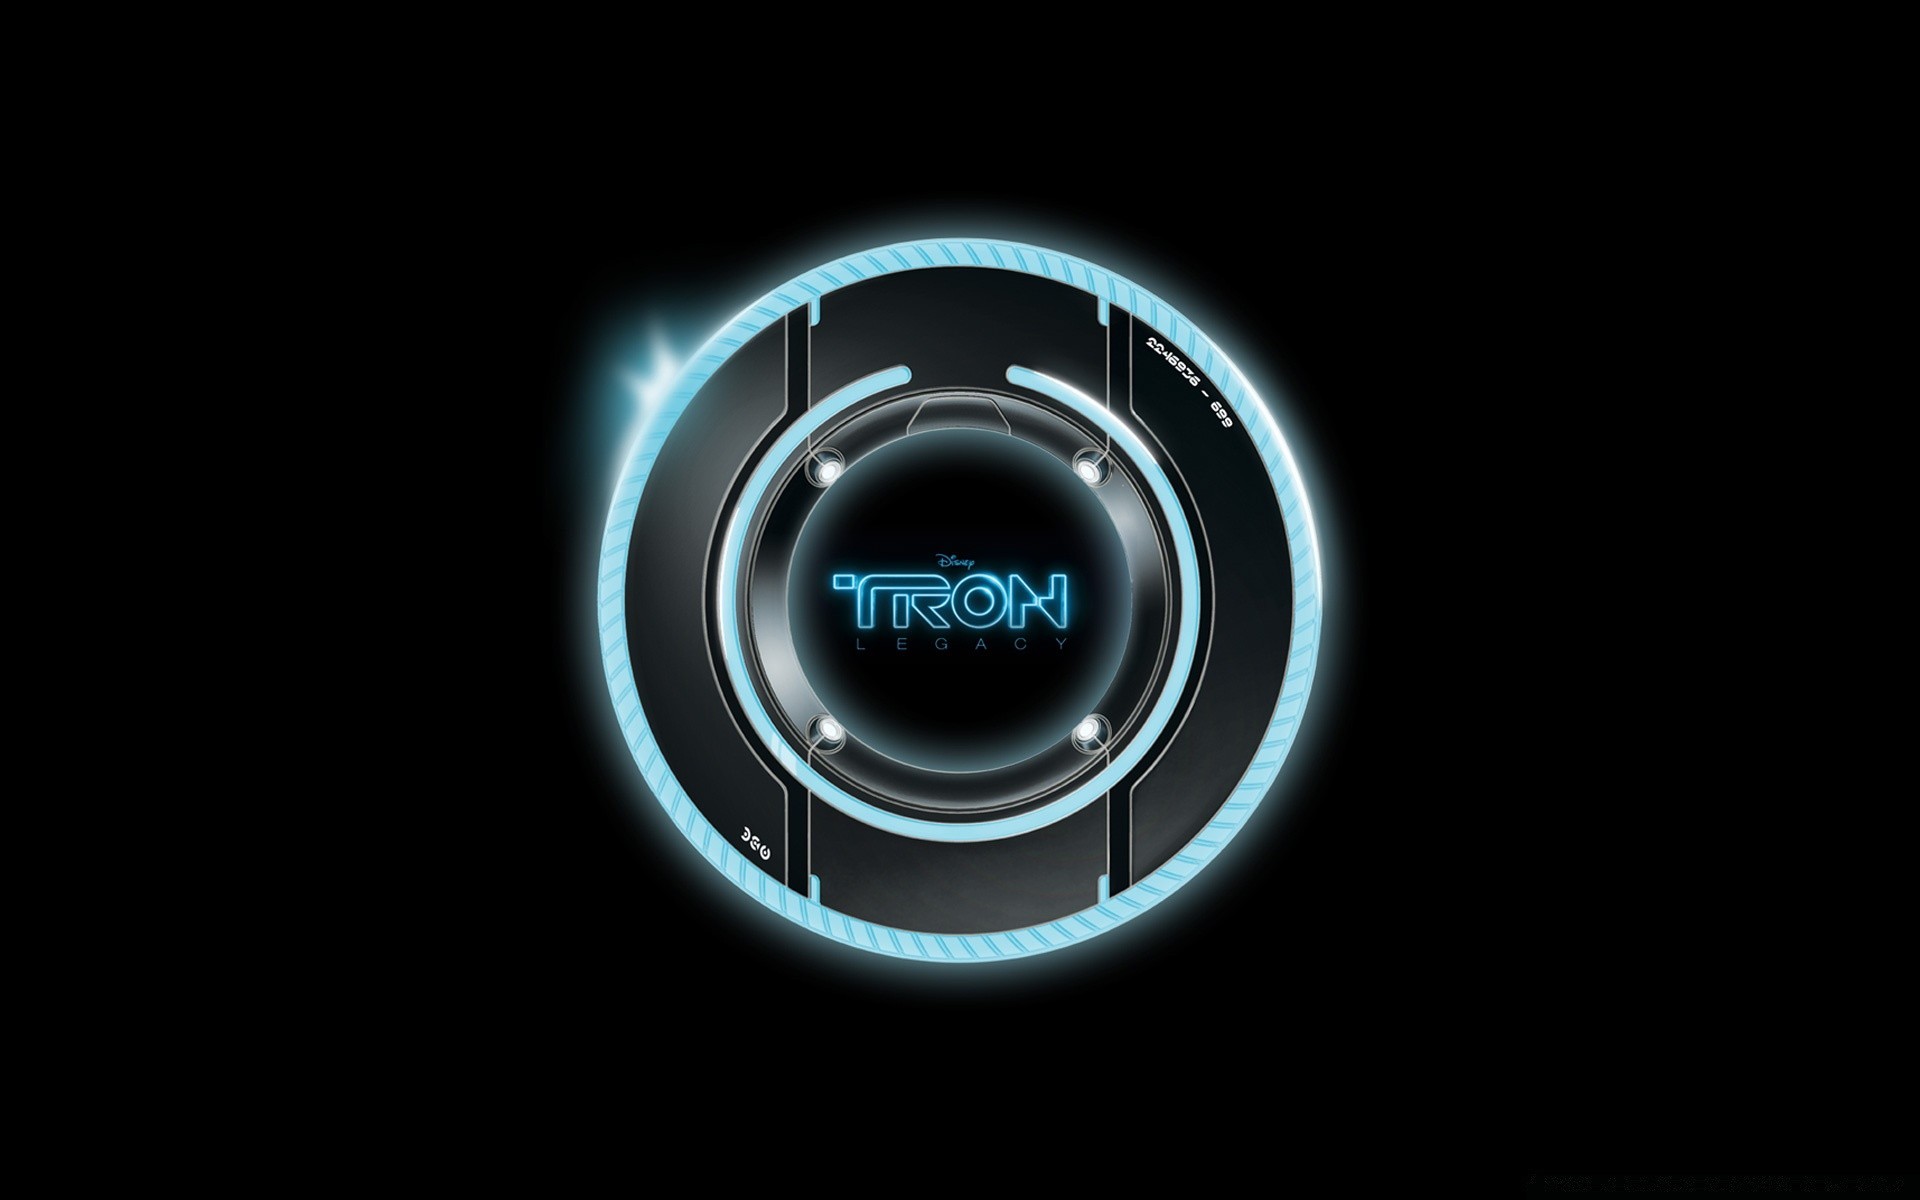 tron legacy design desktop illustration image light abstract graphic technology round shape element energy symbol dark